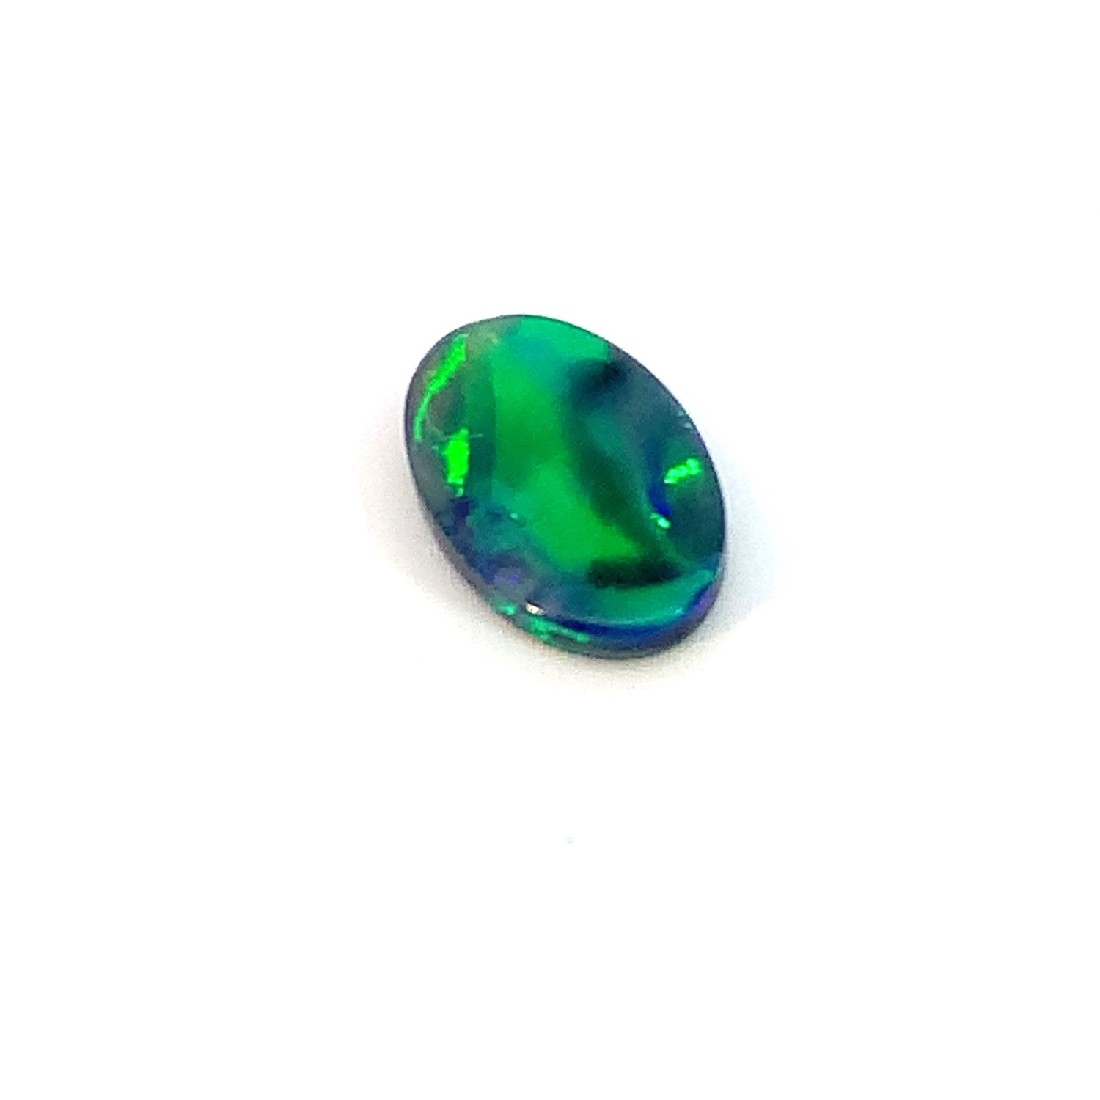 Black Opal 1.5ct Green flash - Masterpiece Jewellery Opal & Gems Sydney Australia | Online Shop